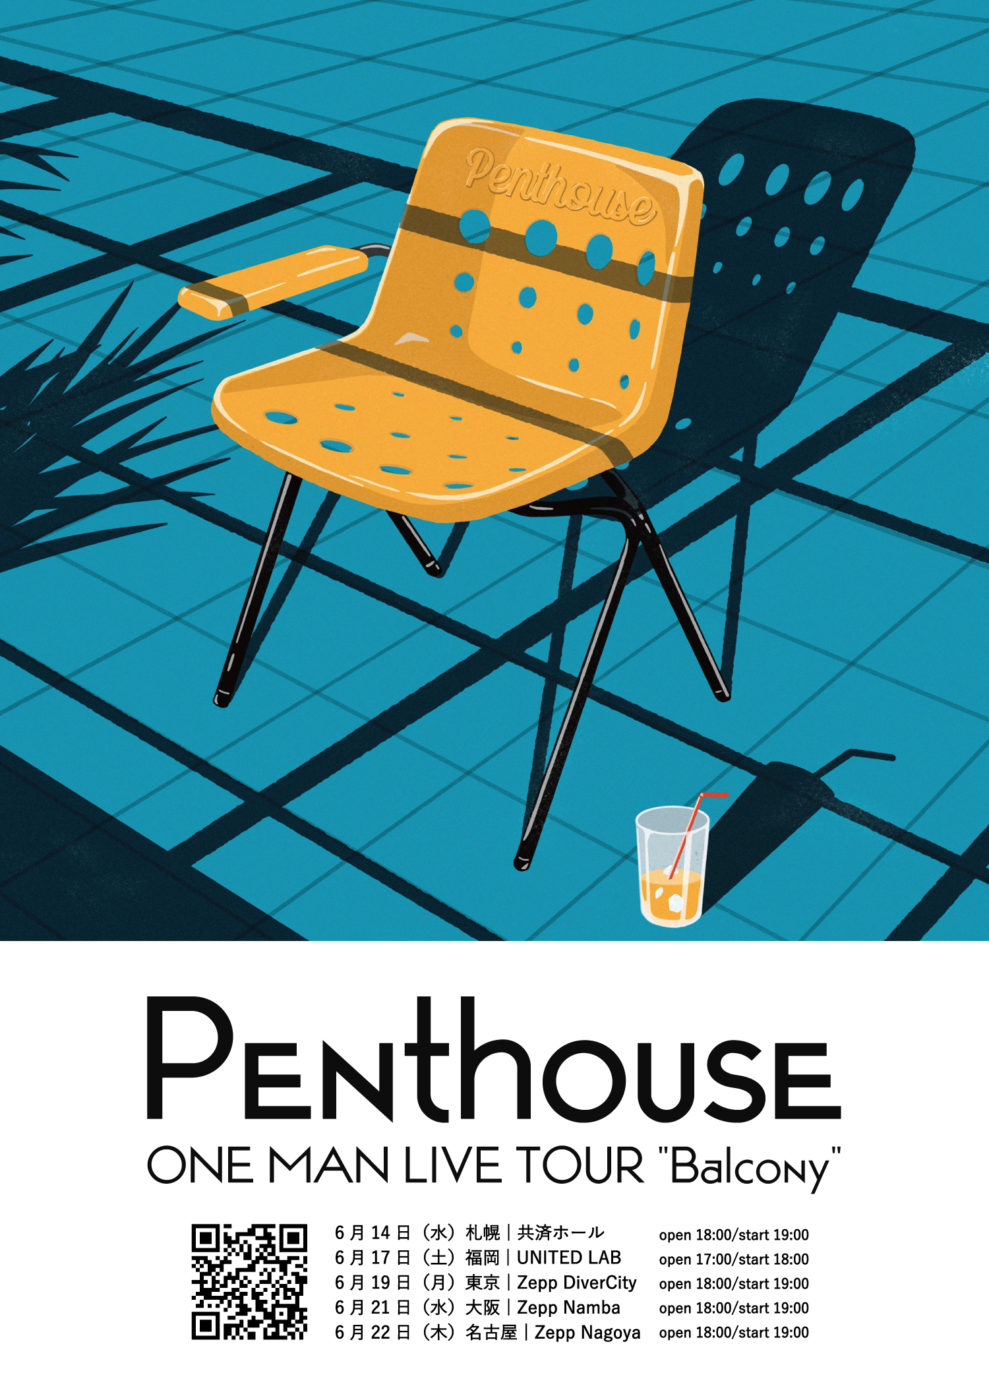 6月22日(木) Penthouse ONE MAN LIVE TOUR “Balcony” 名古屋・Zepp Nagoya